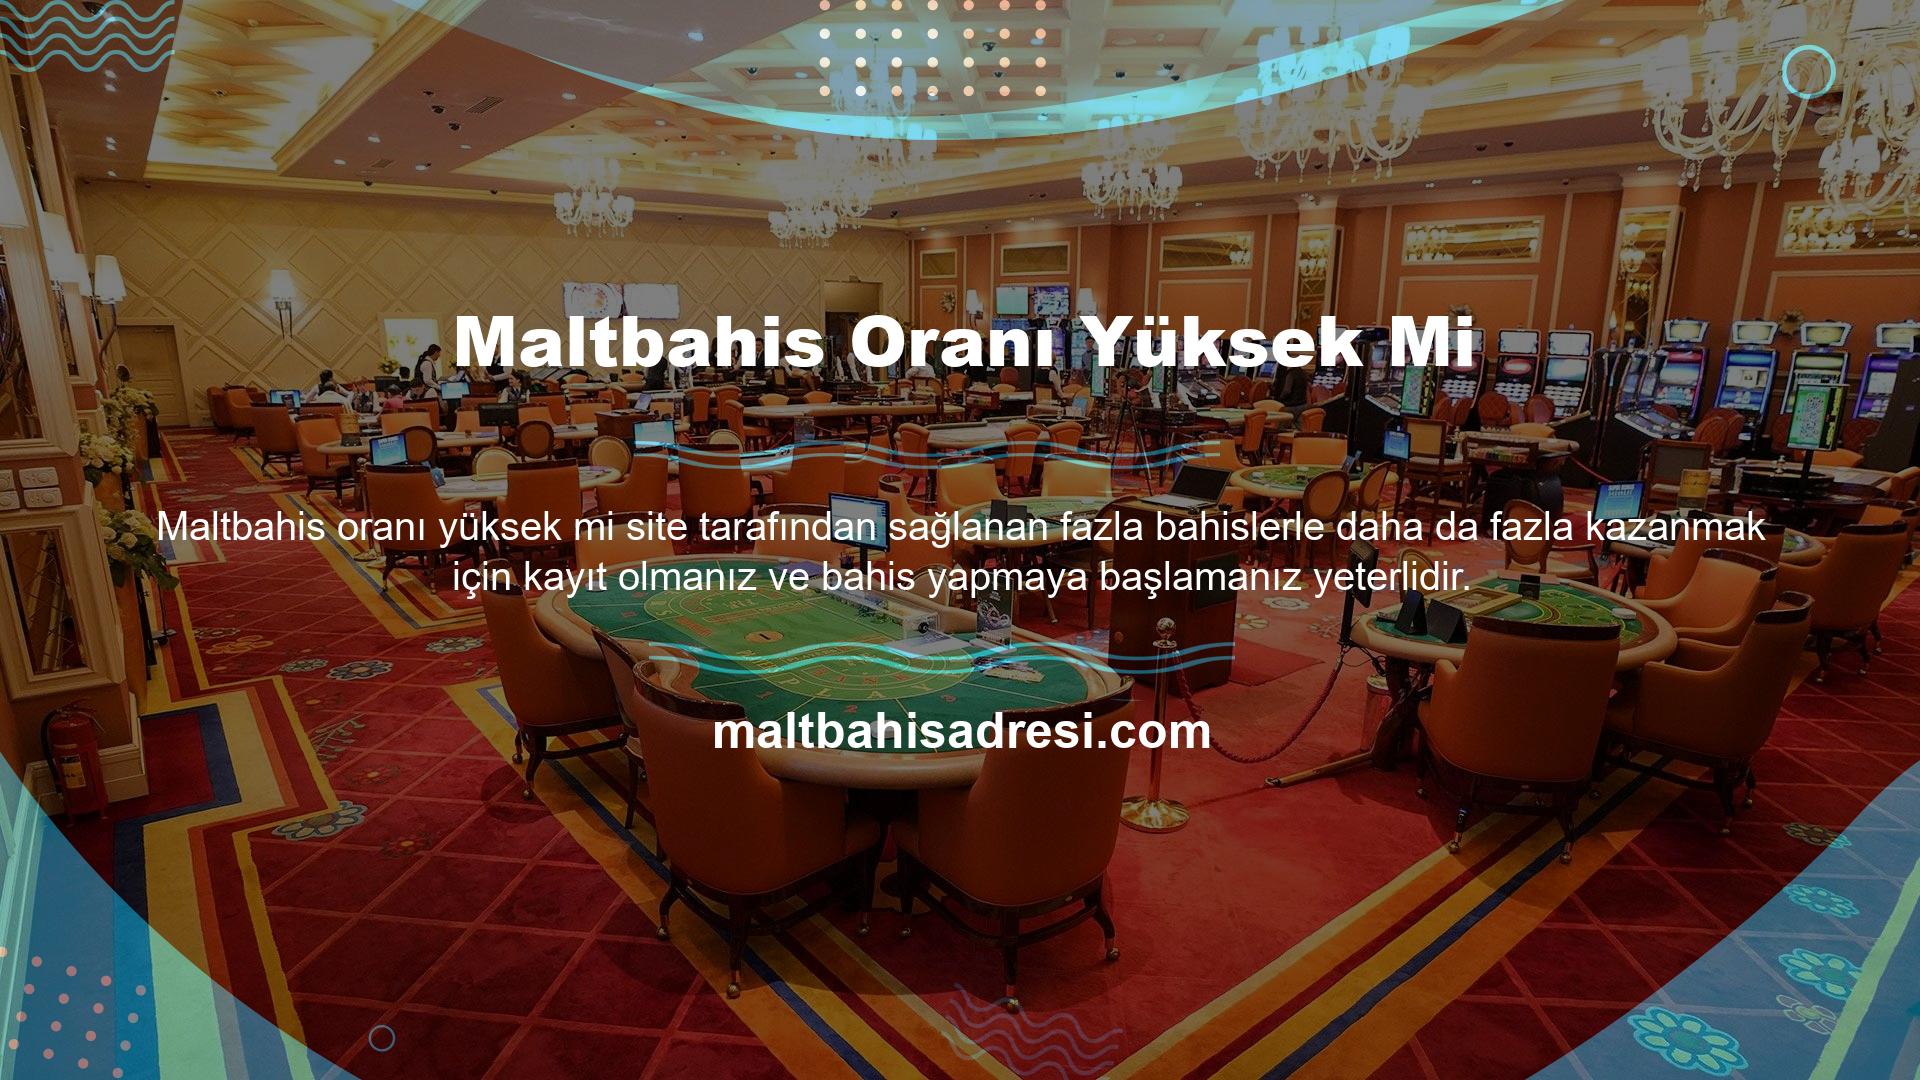 Mevcut Maltbahis web sitesi giriş adresi Maltbahis